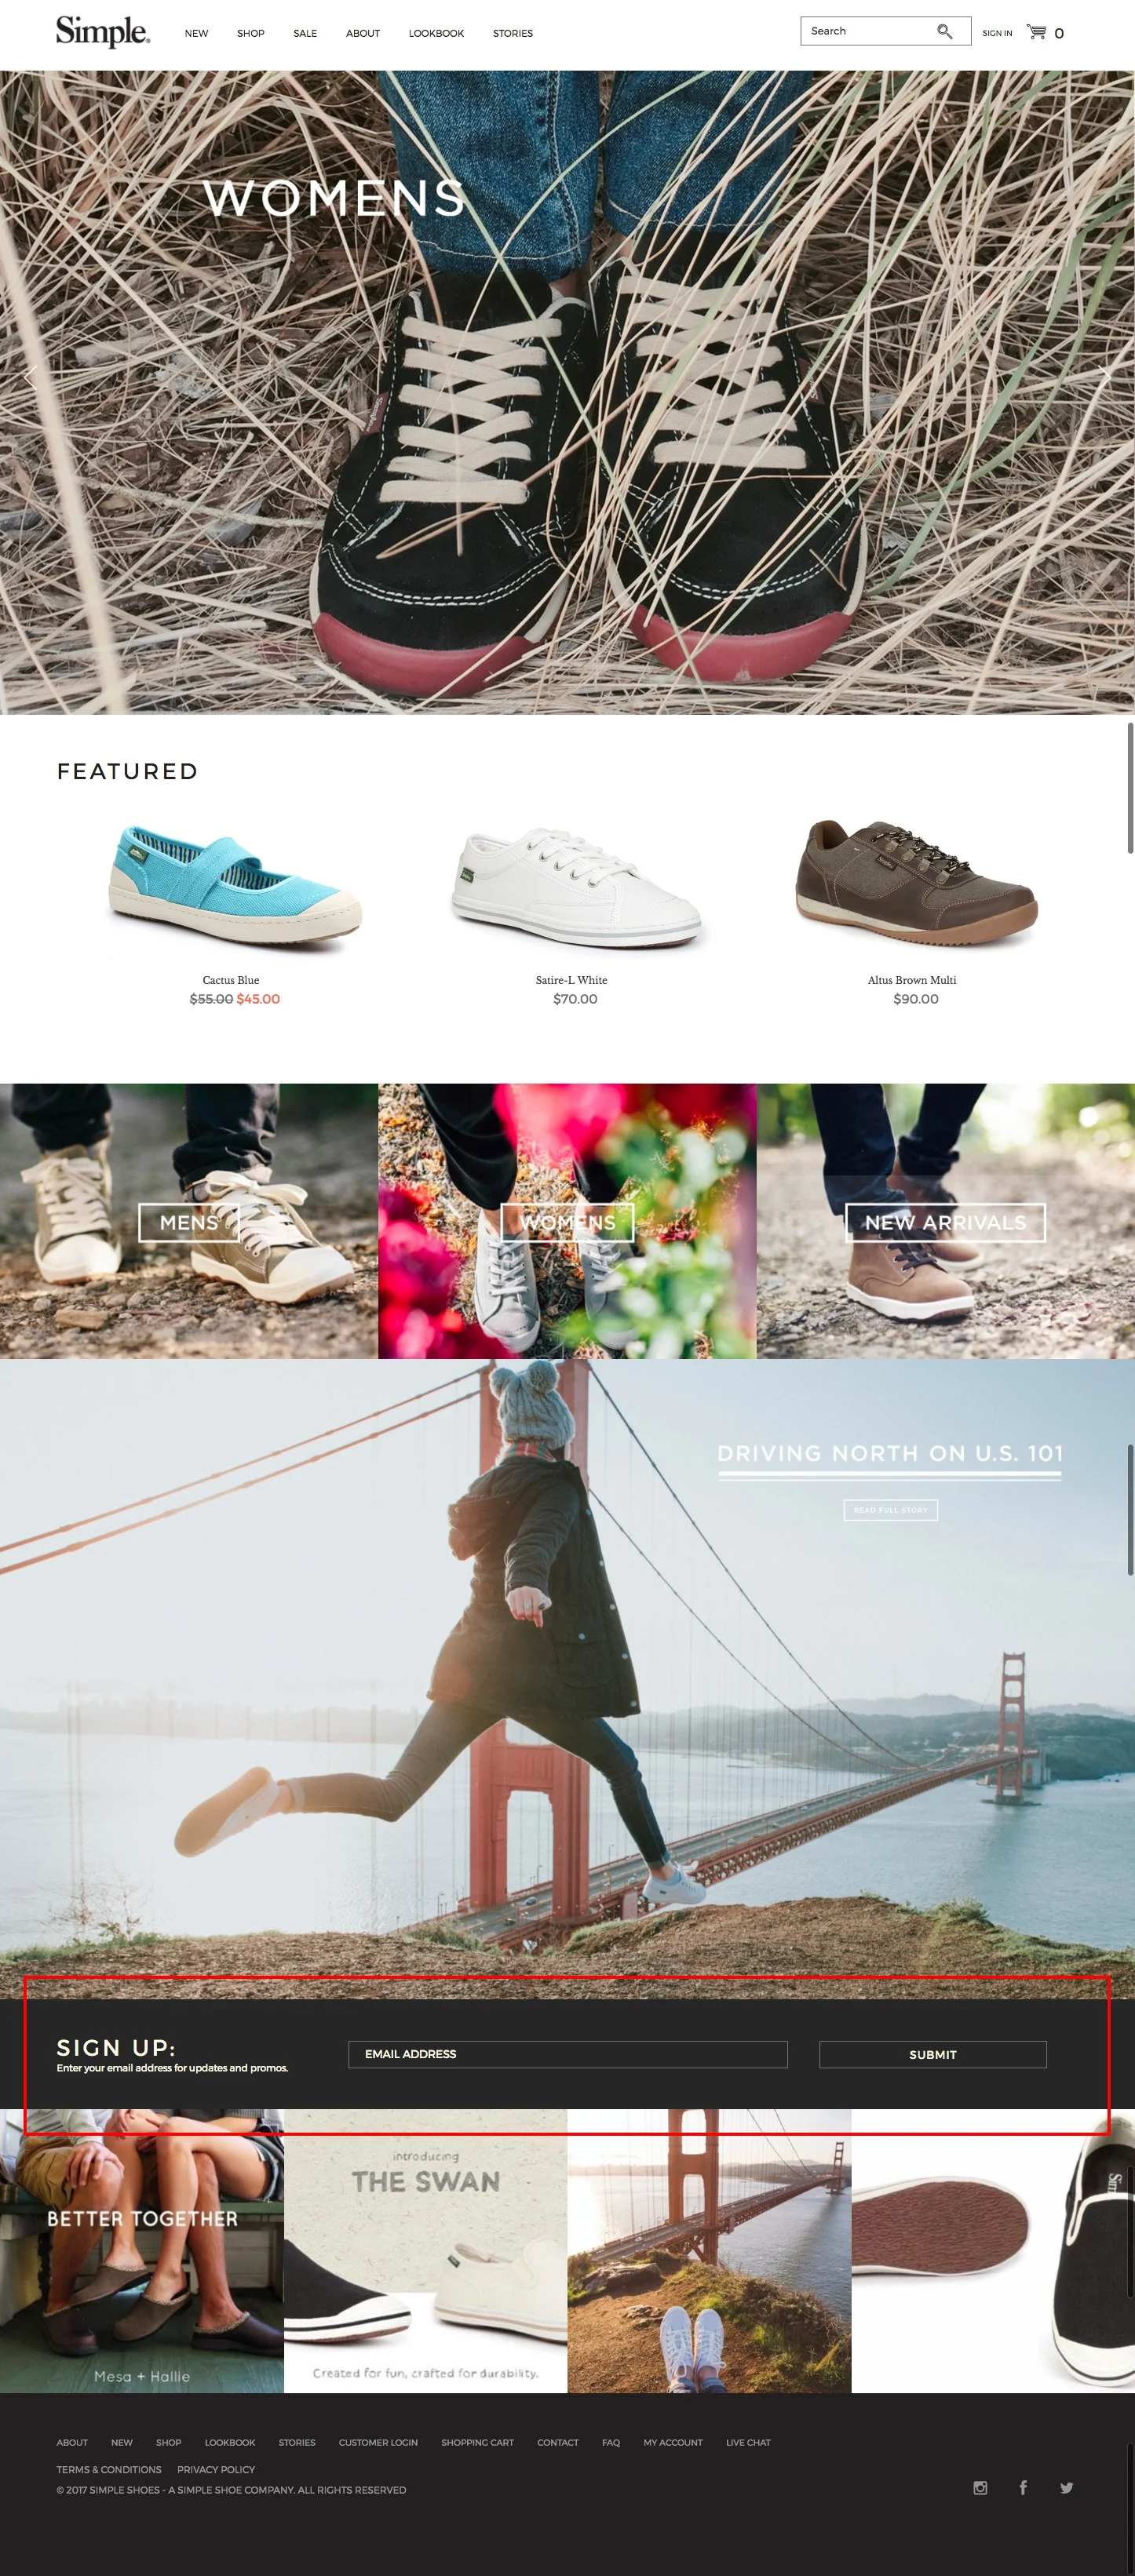 https://bcwpmktg.wpengine.com/wp-content/uploads/2015/04/Simple-Shoes-ctas.jpg